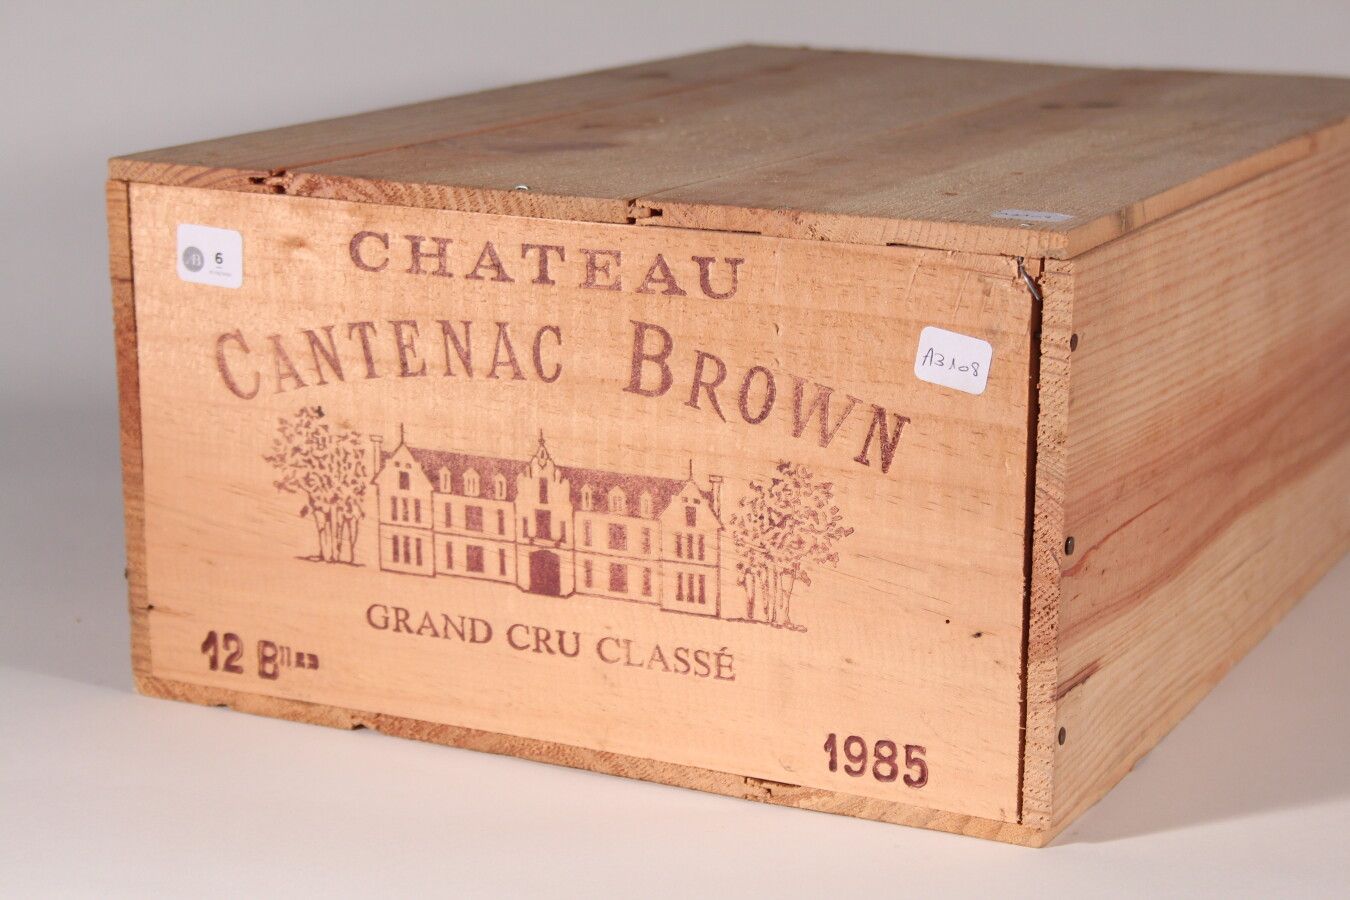 Null 1985 - Château Cantenac Braun

Margaux Rot - 12 blles CBO